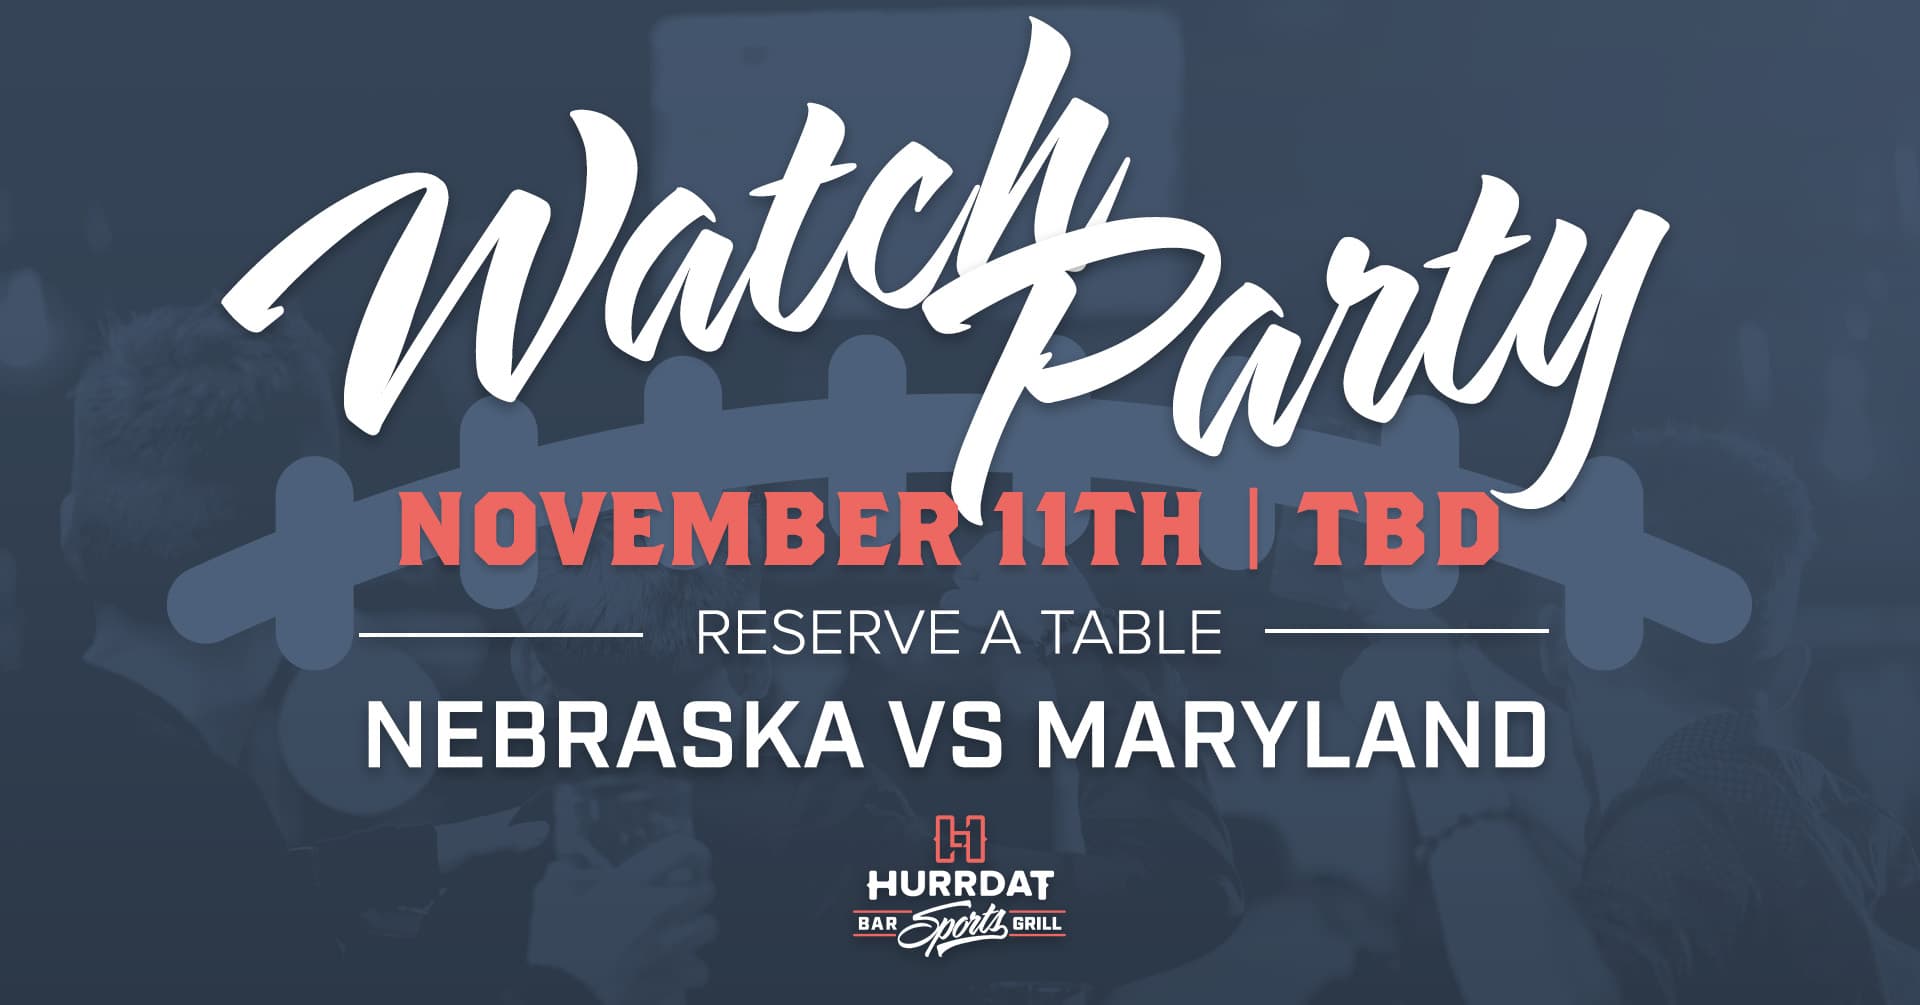 NE vs Maryland watch party